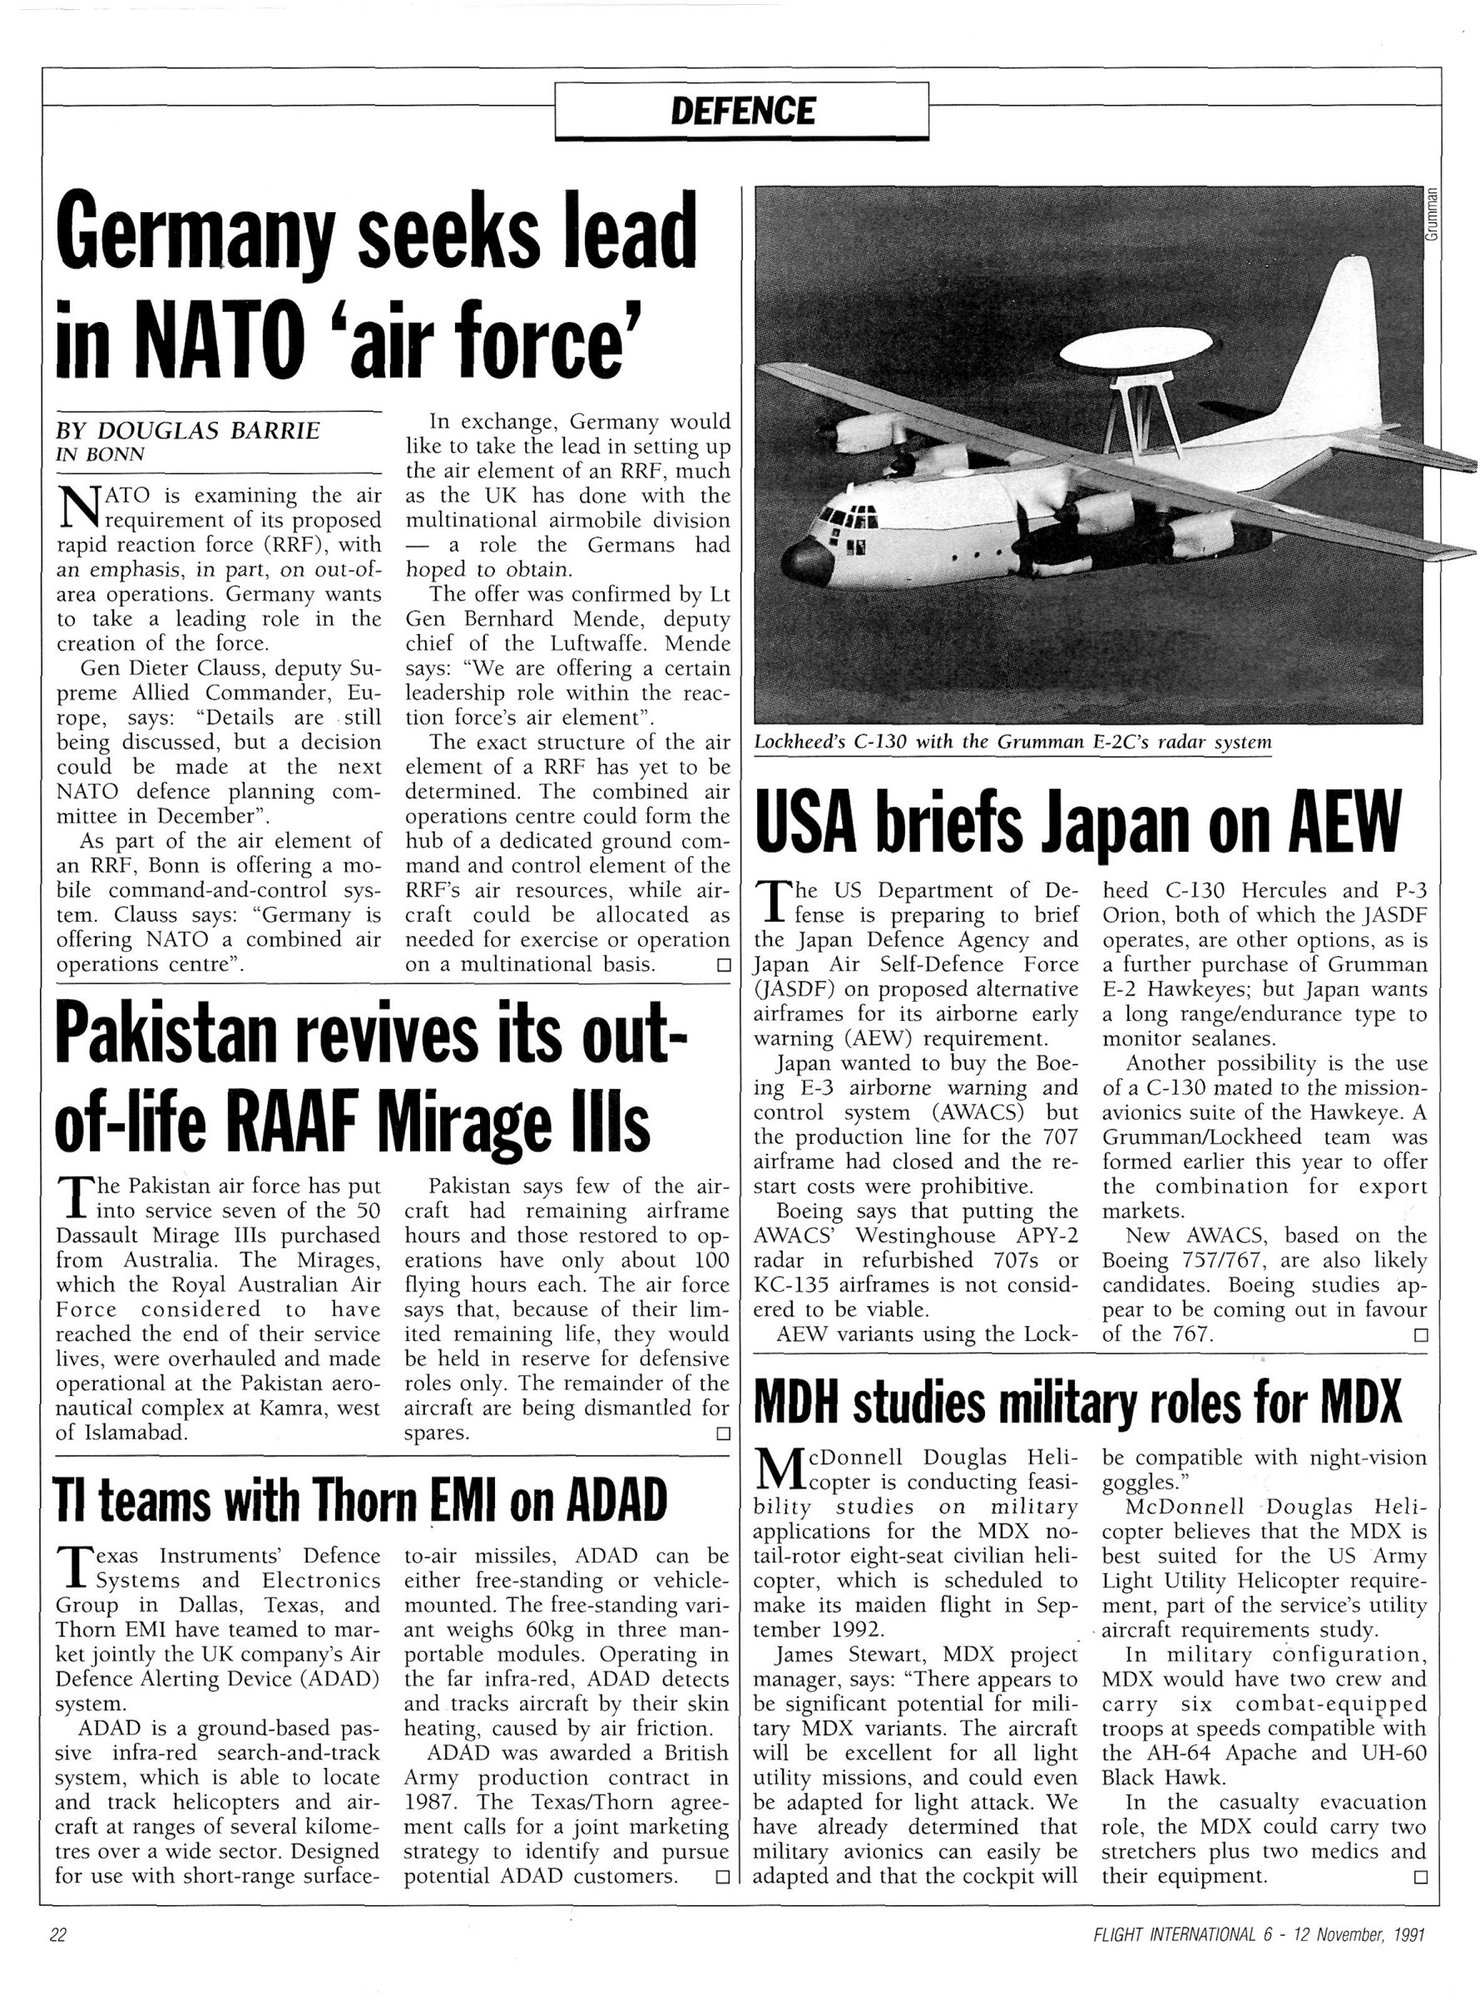 Pakistan revives its out of life RAAF Mirage-IIIs.jpg